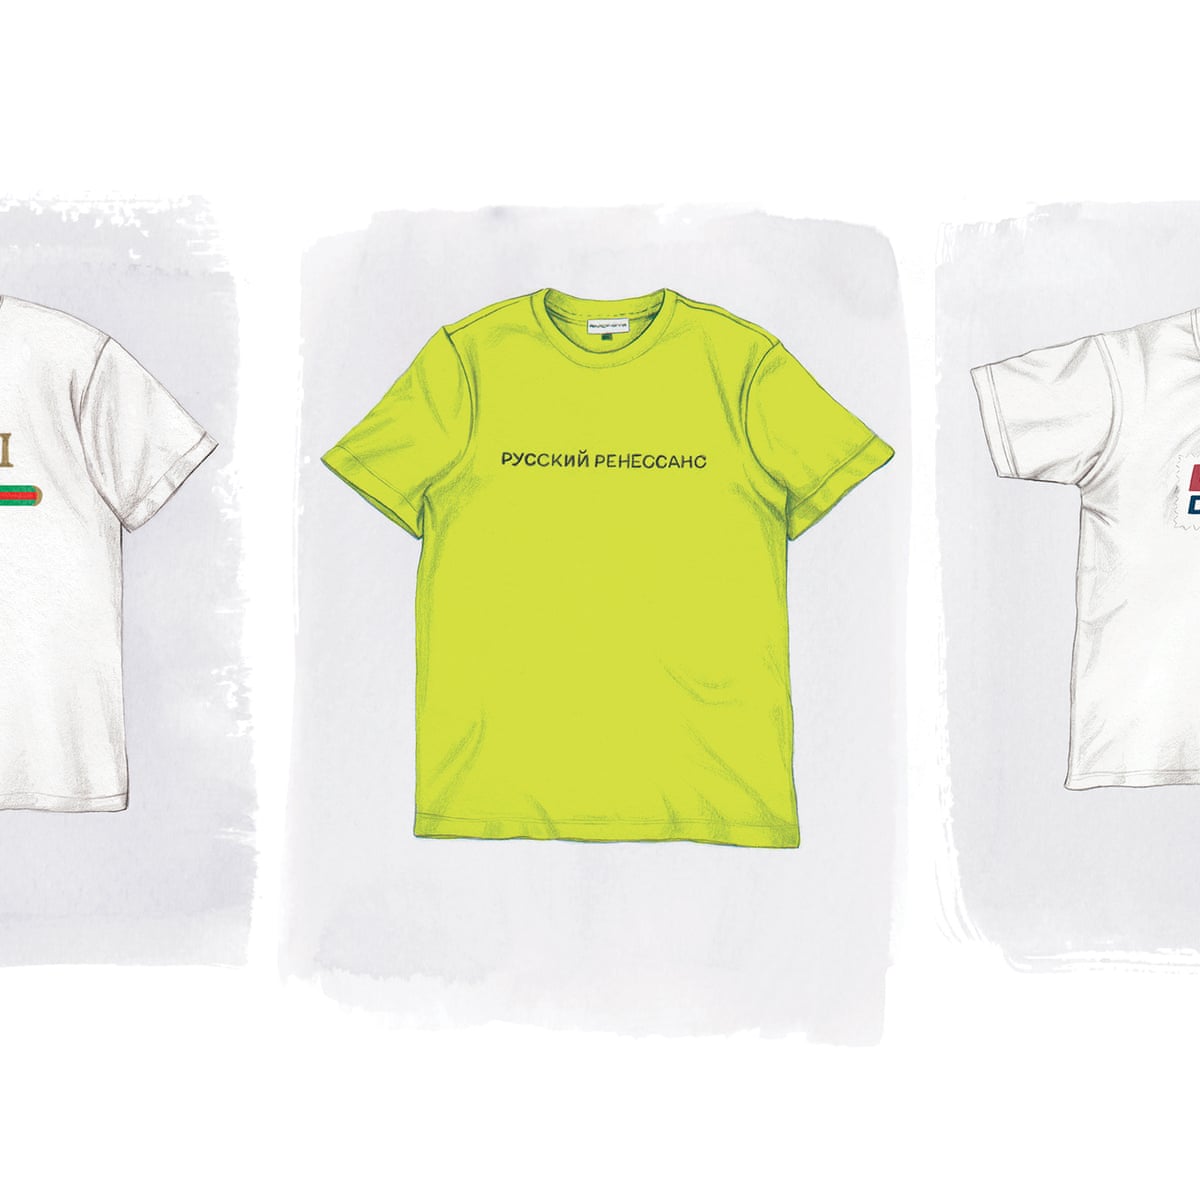 The write stuff: slogan T-shirts go haute  Fashion  The Guardian